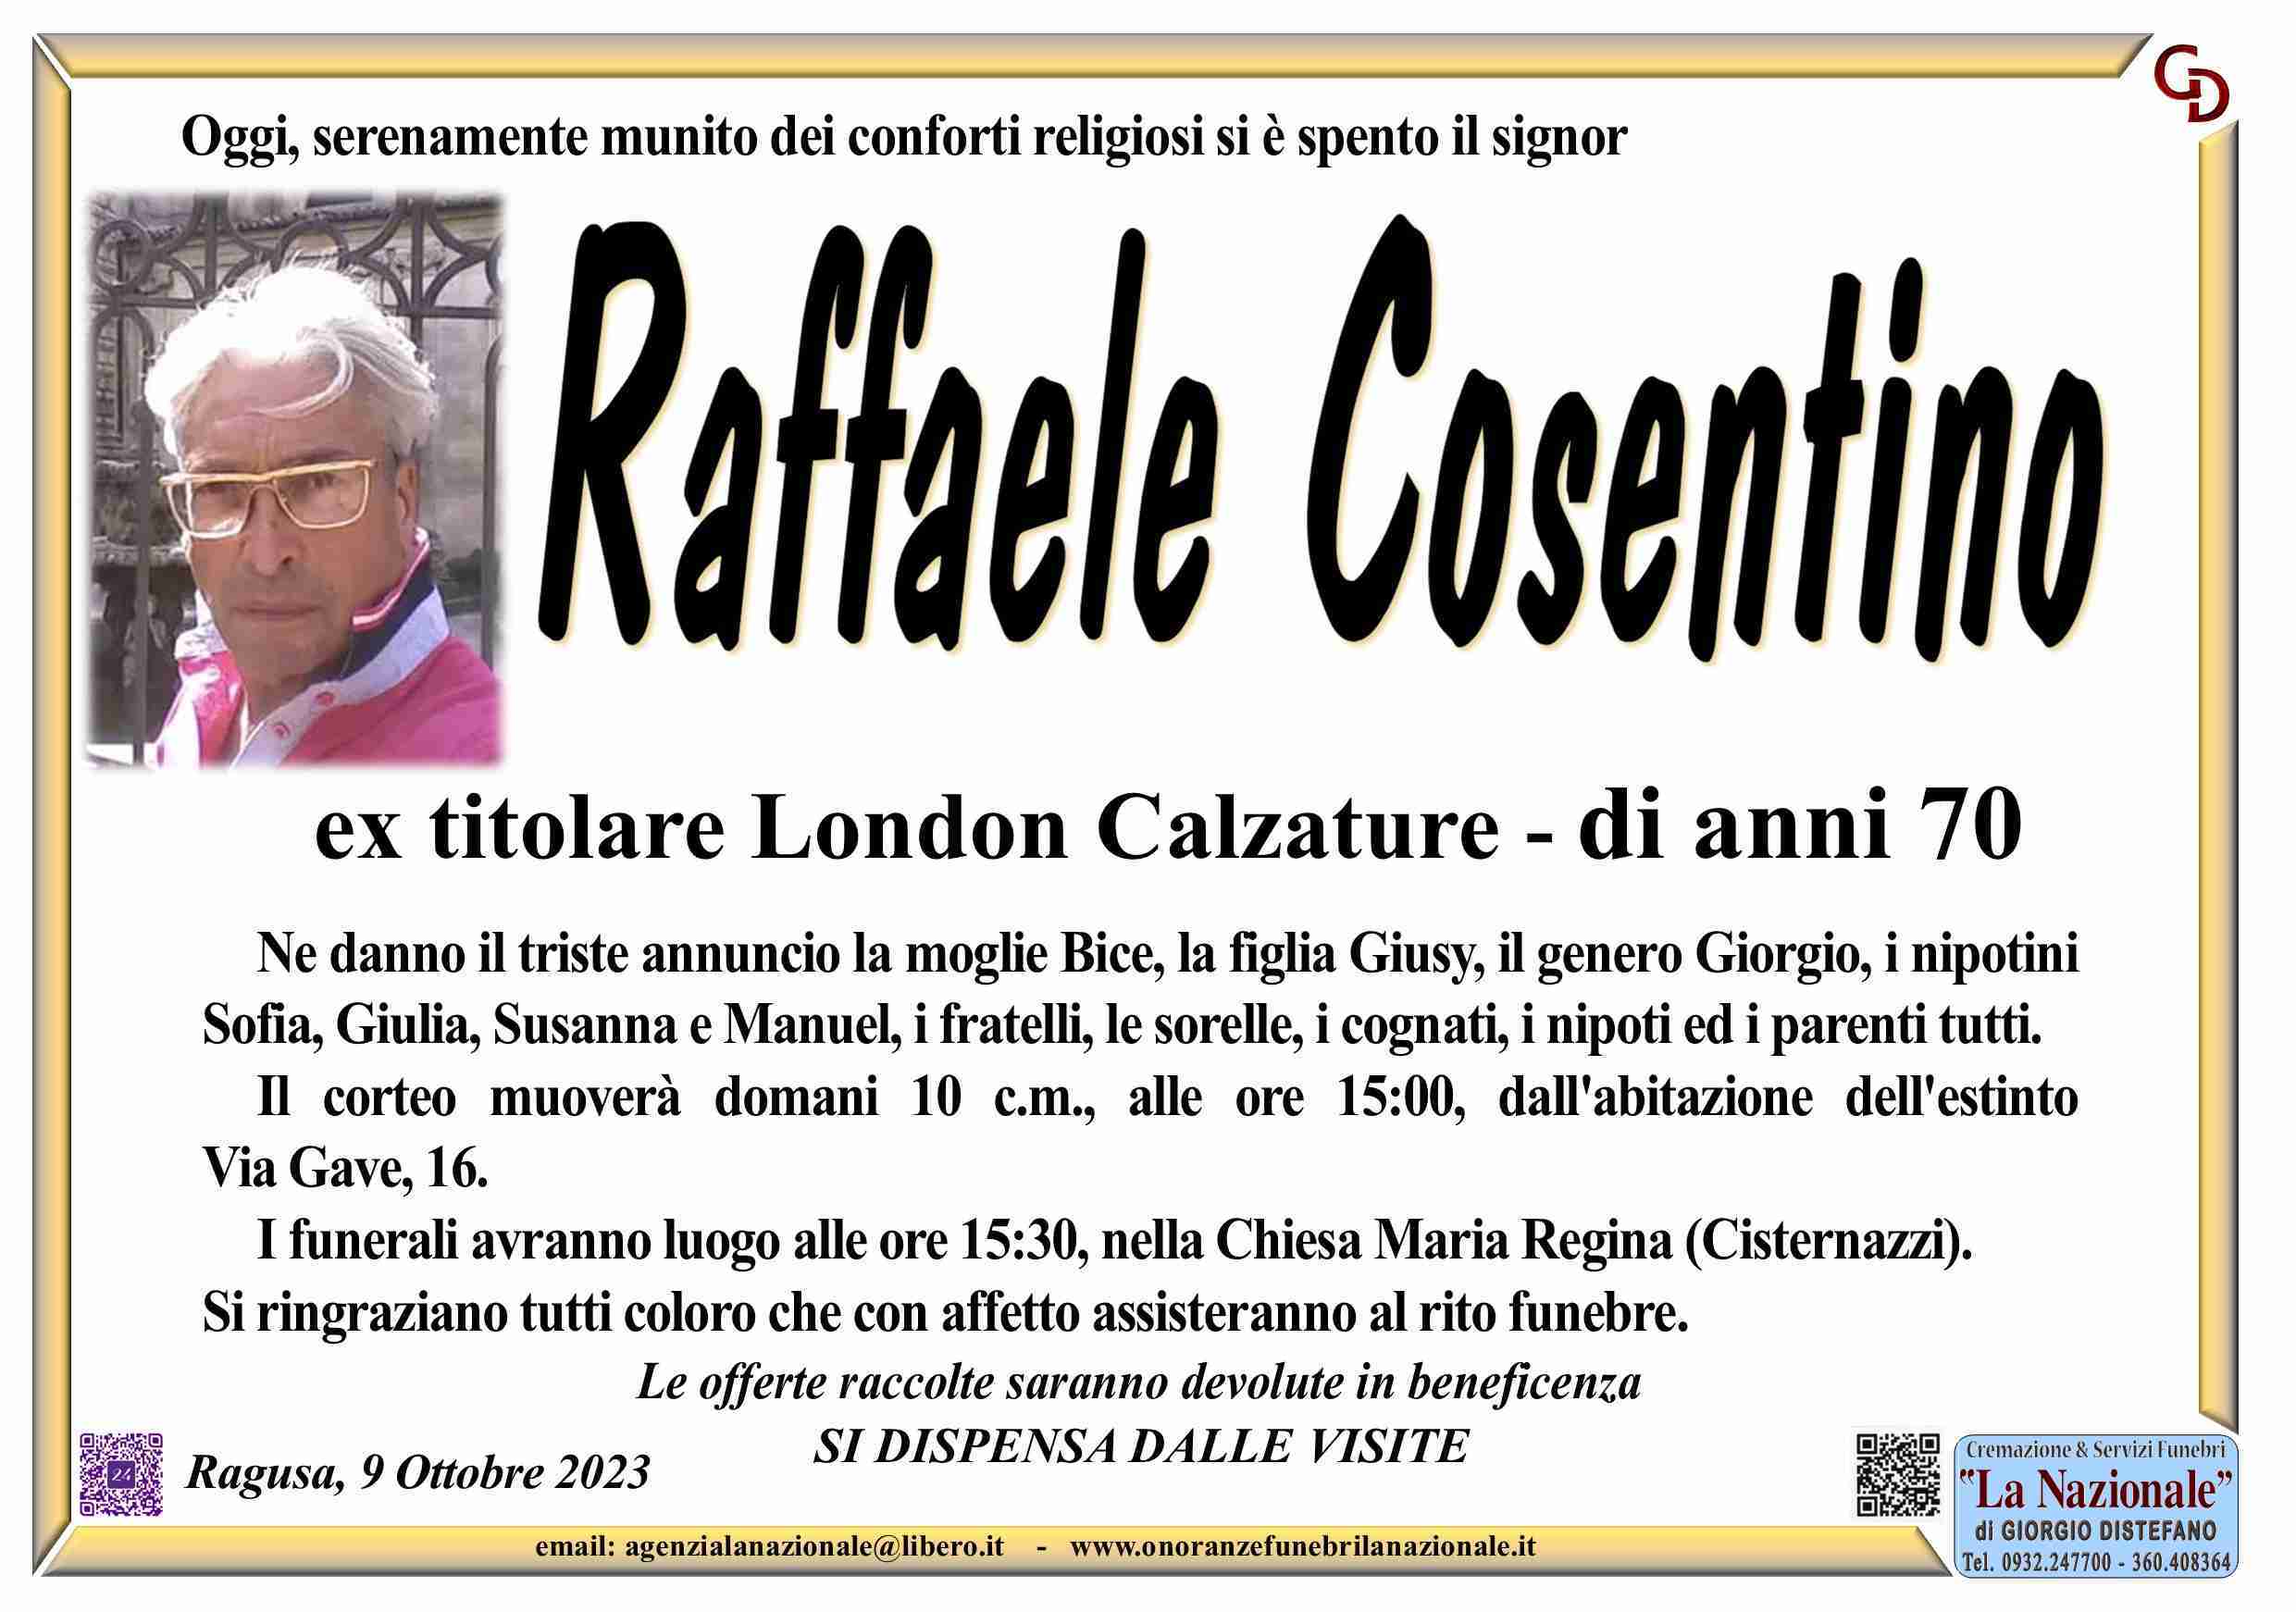 Raffaele Cosentino